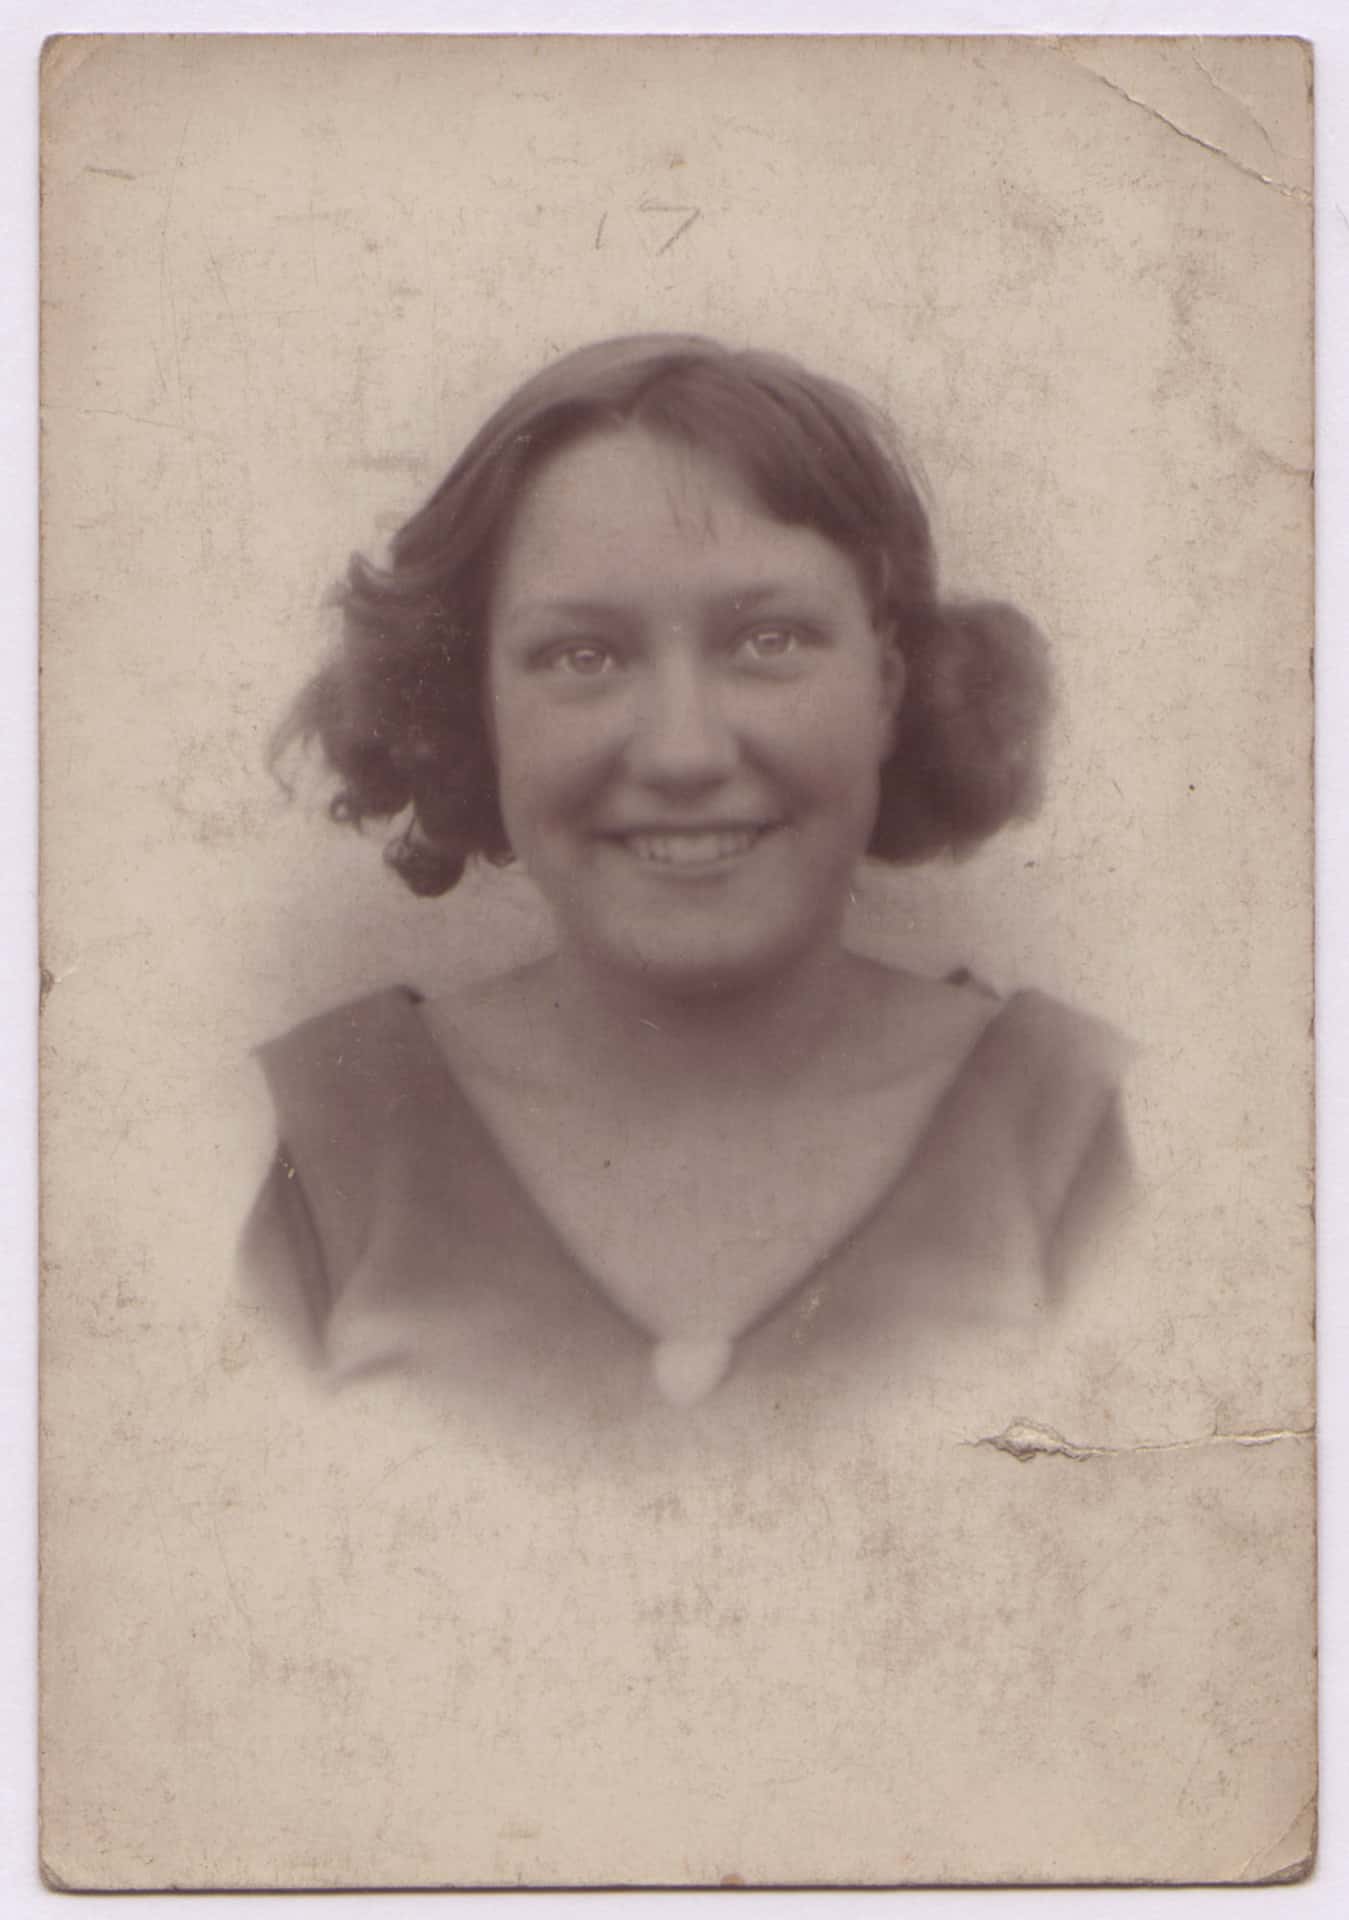 My nan Rose as a young girl c1935